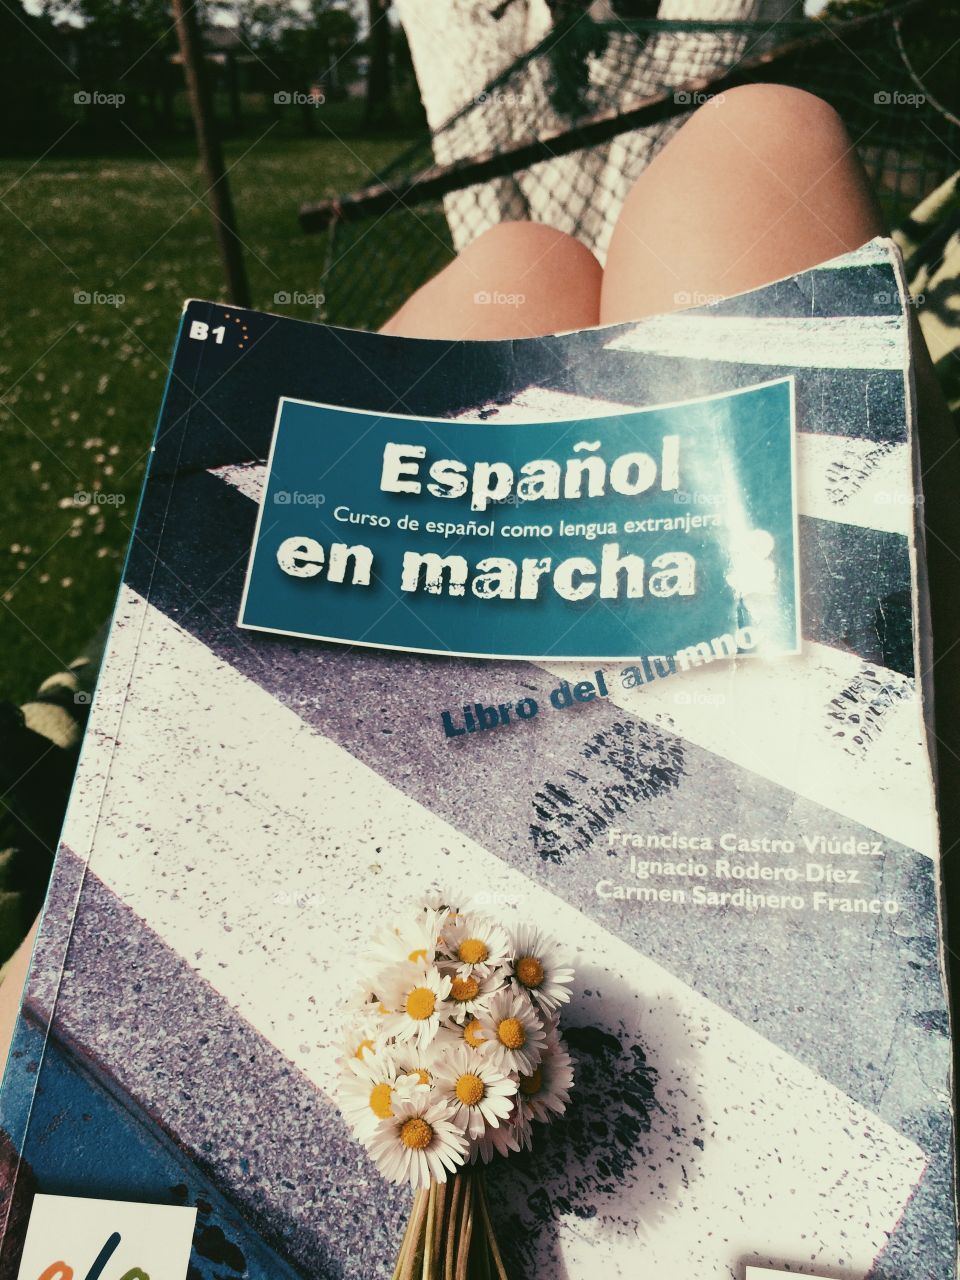 Studying Spanish . Nice sunny day spent on learning Spanish